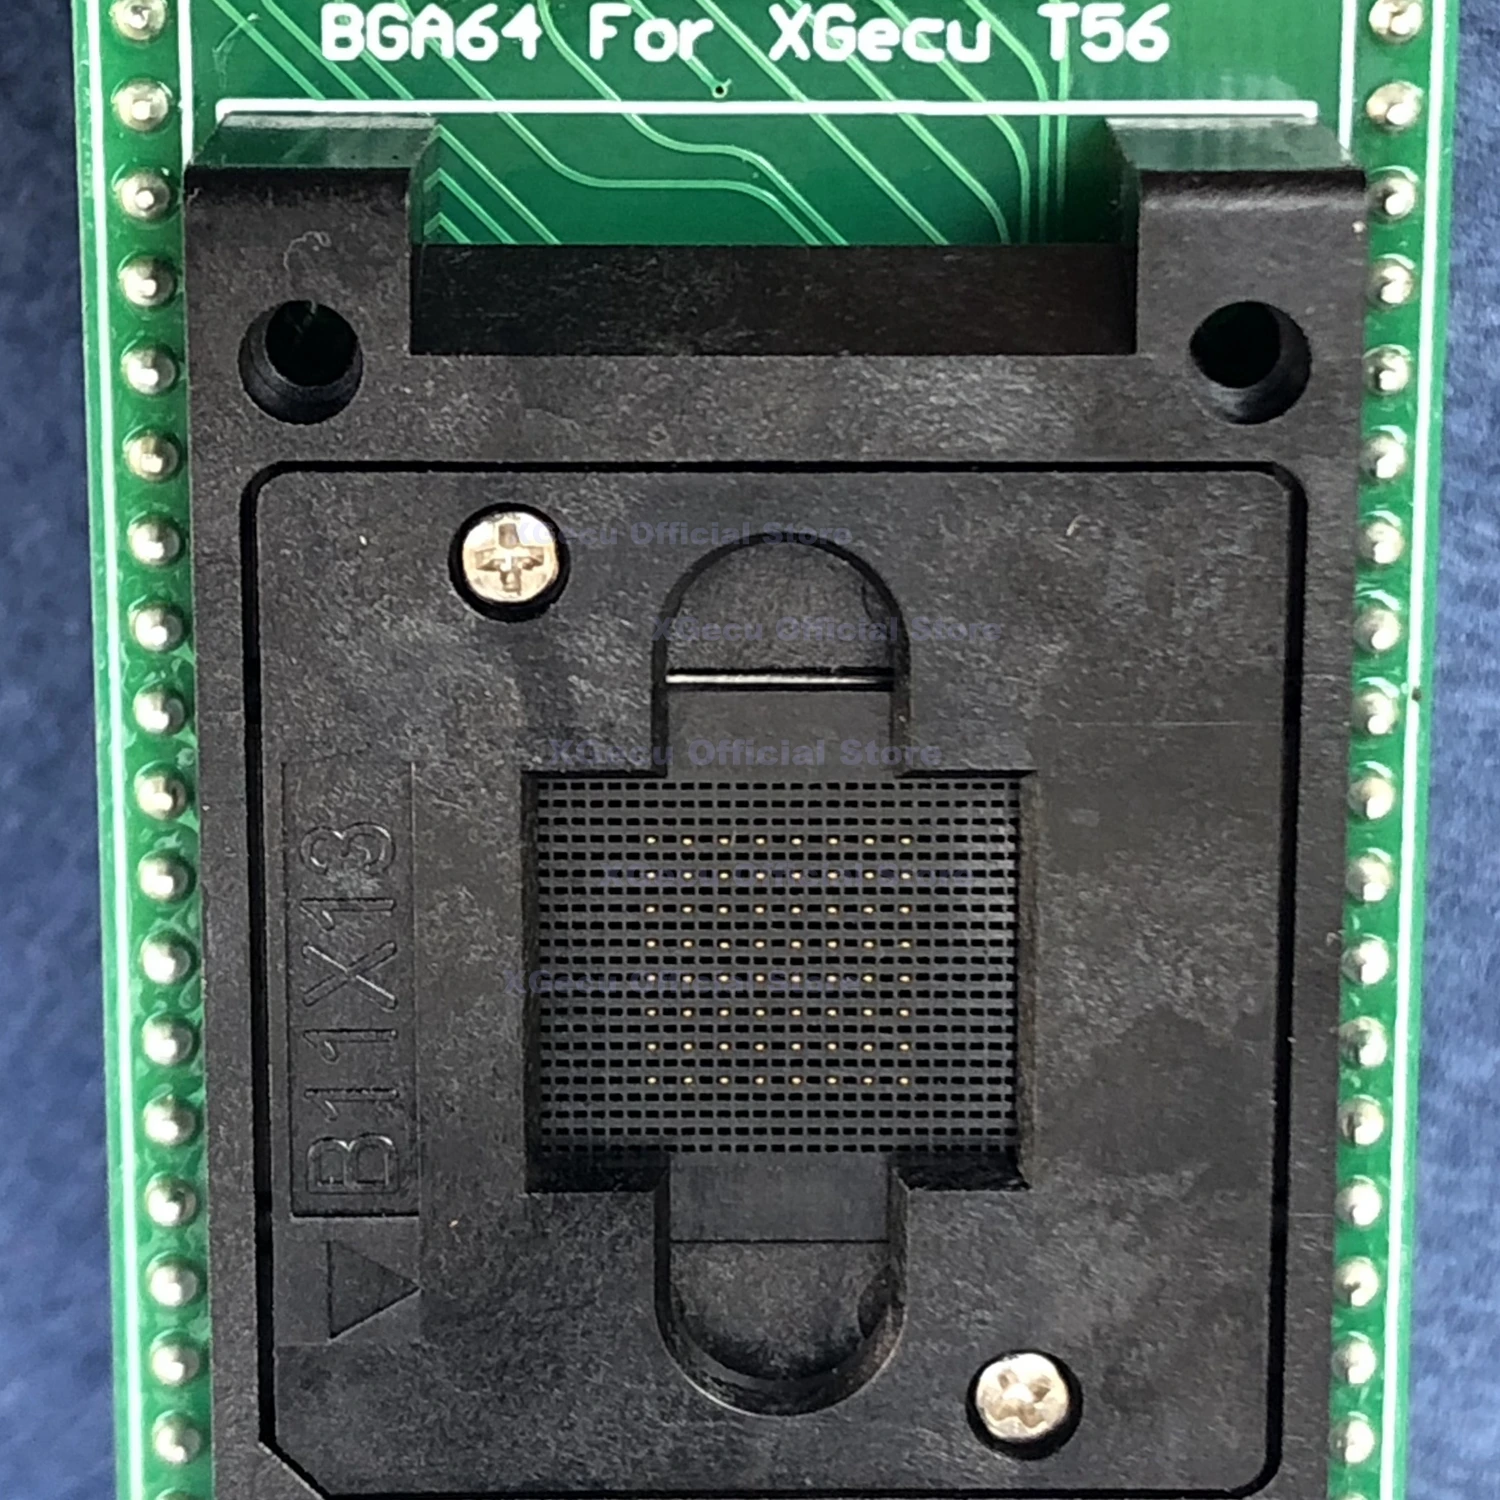 BGA64-DIP48 adaptor IC soclu (XG-ADP-BGA64A-1.0) numai pentru XGecu T56 programator